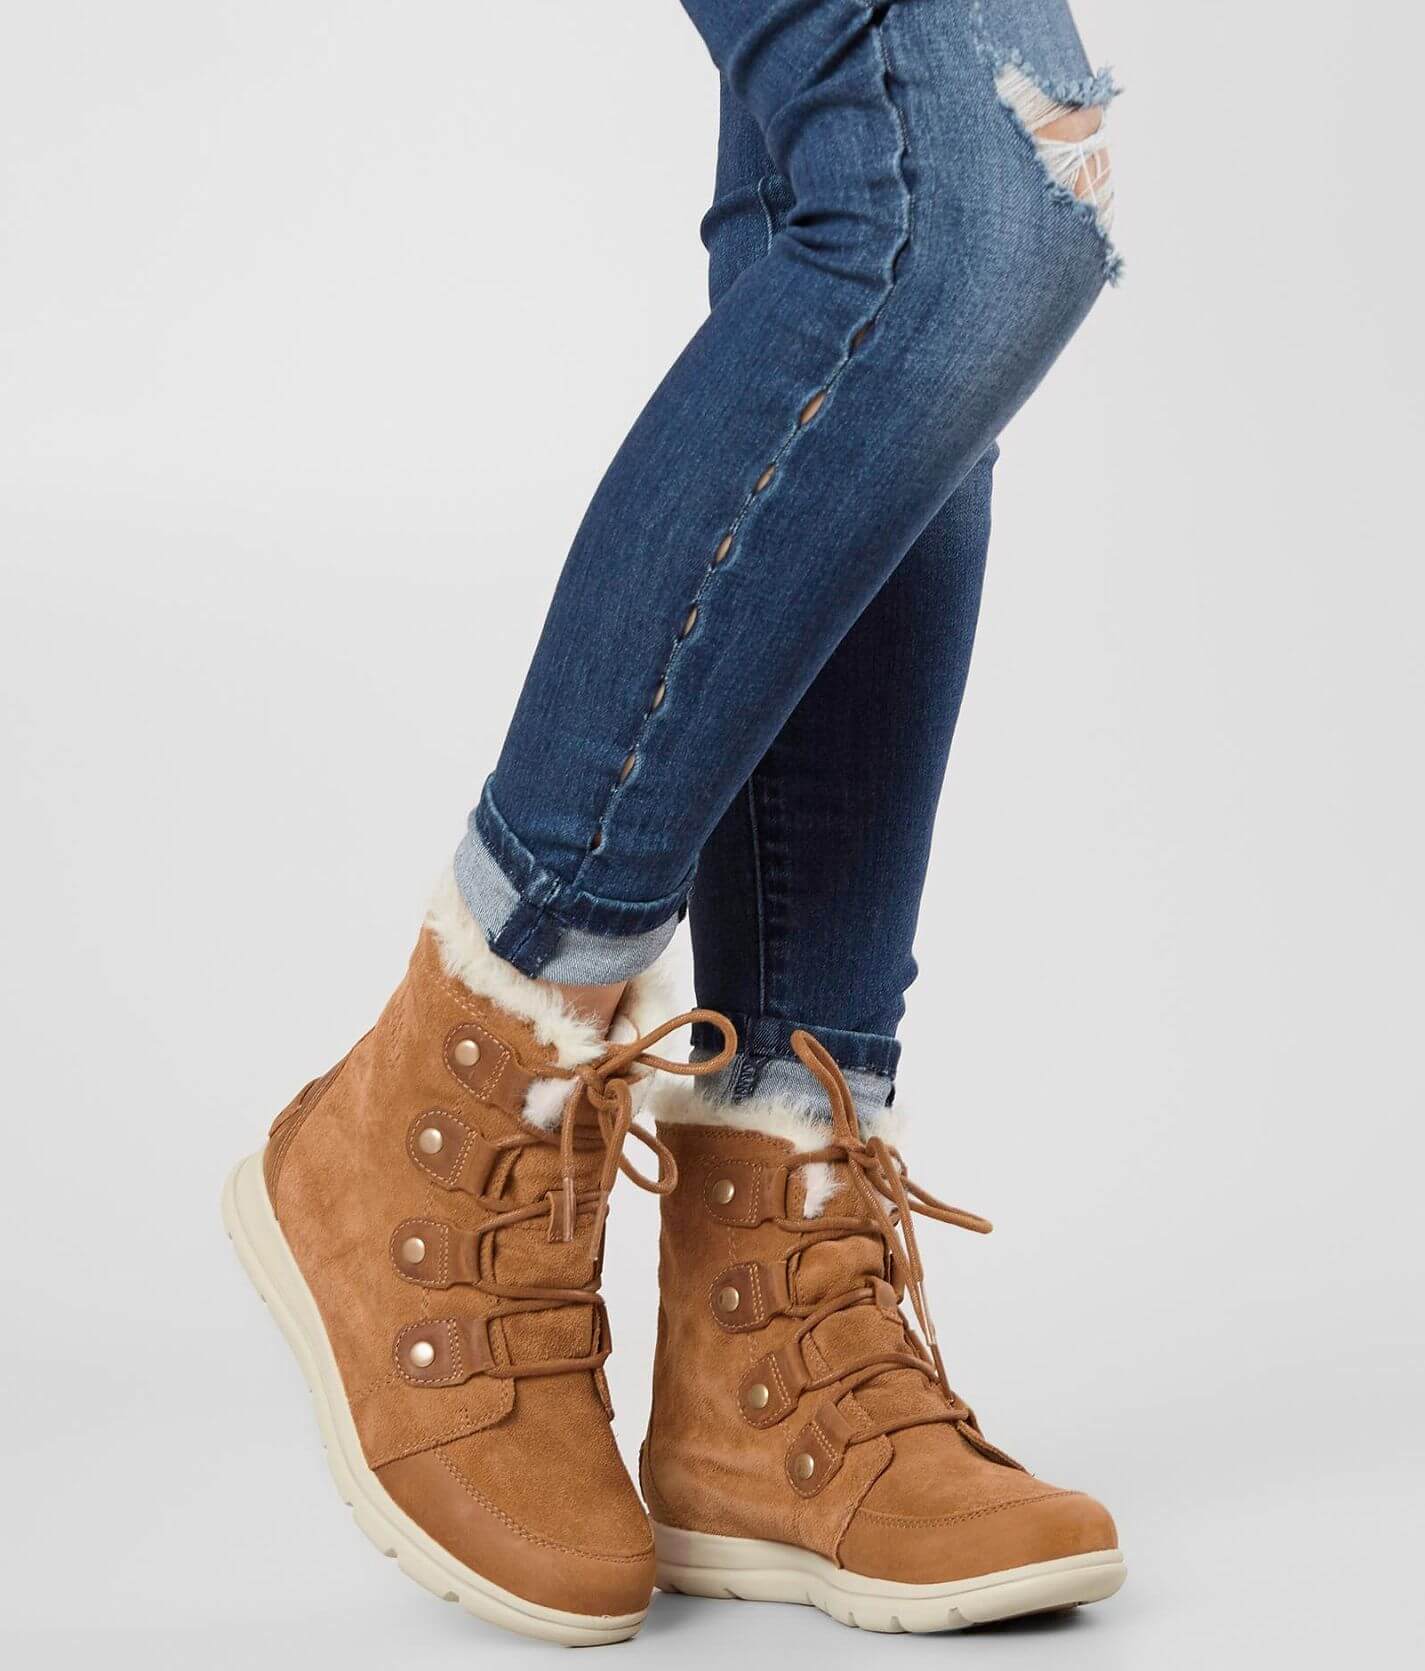 Sorel Explorer Joan™ Waterproof Leather Boot - Women's in Camel Brown | Buckle